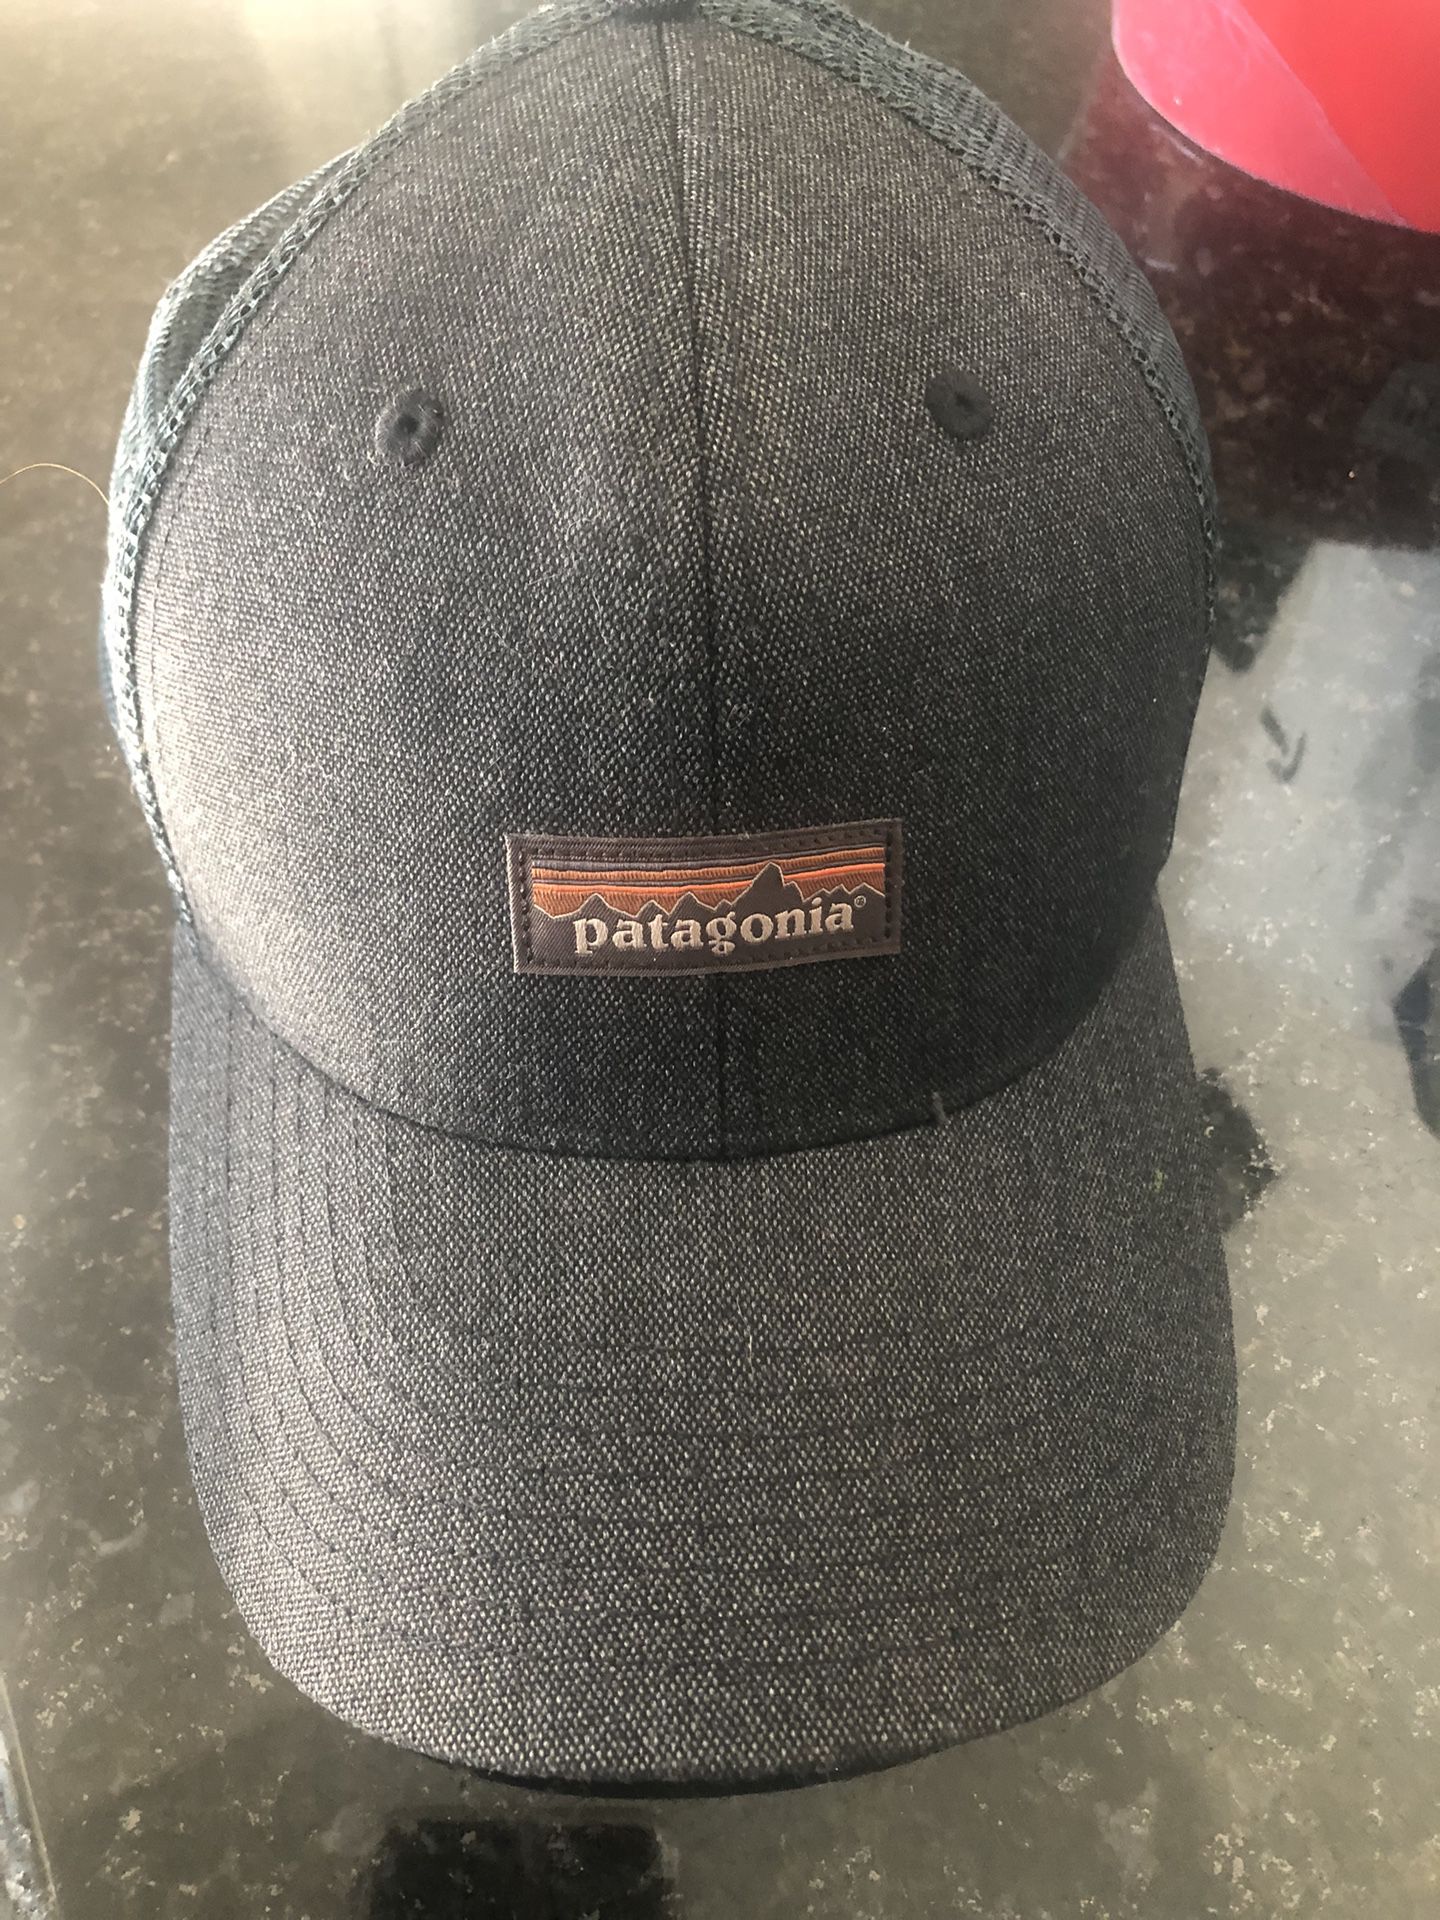 Patagonia Snap Back Hat